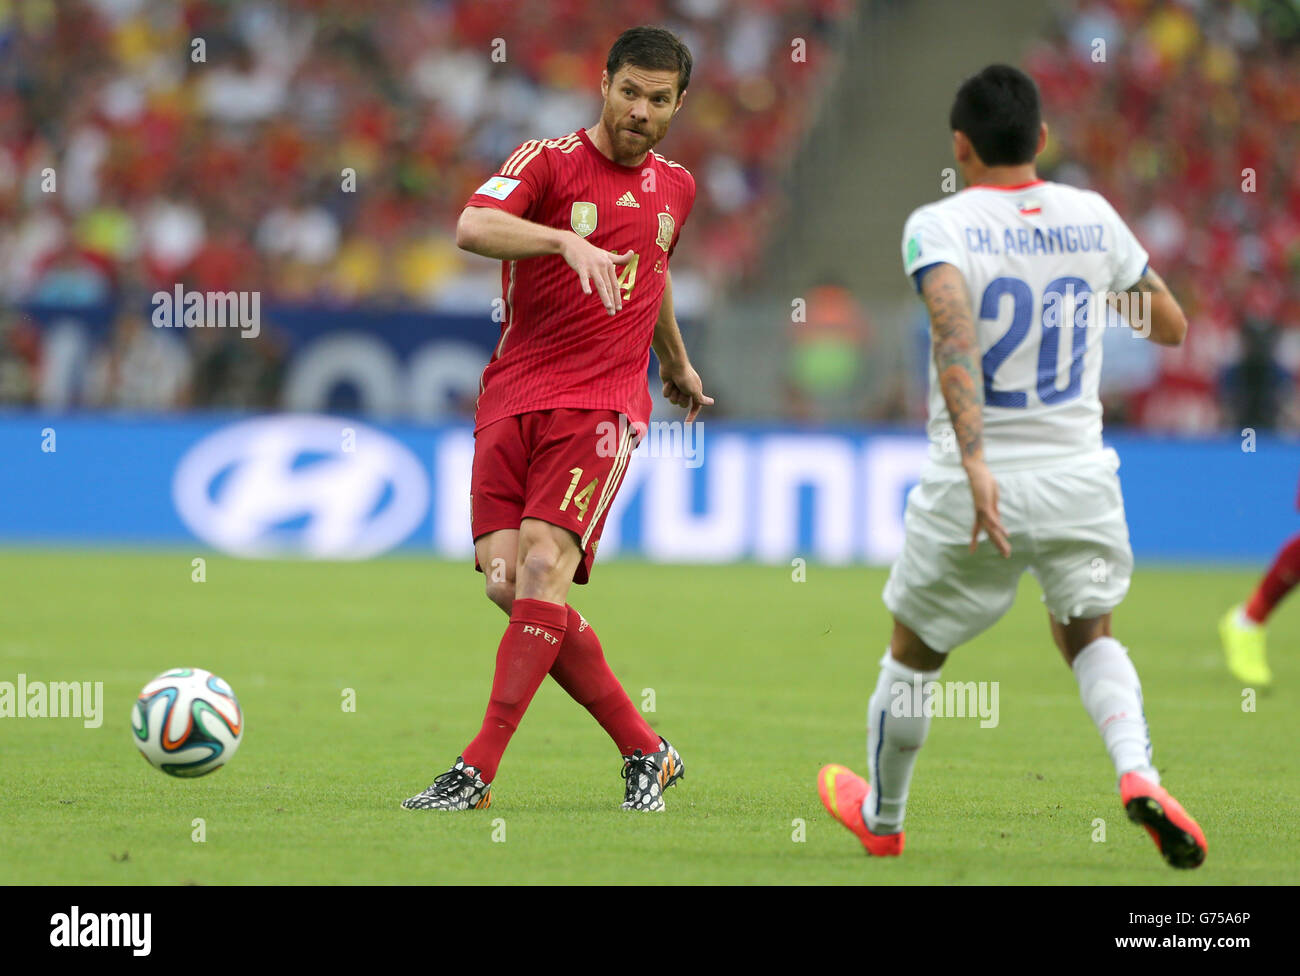 Soccer - FIFA World Cup 2014 - Group B - Spain v Chile - Maracana. Spain's Xabi Alonso Stock Photo